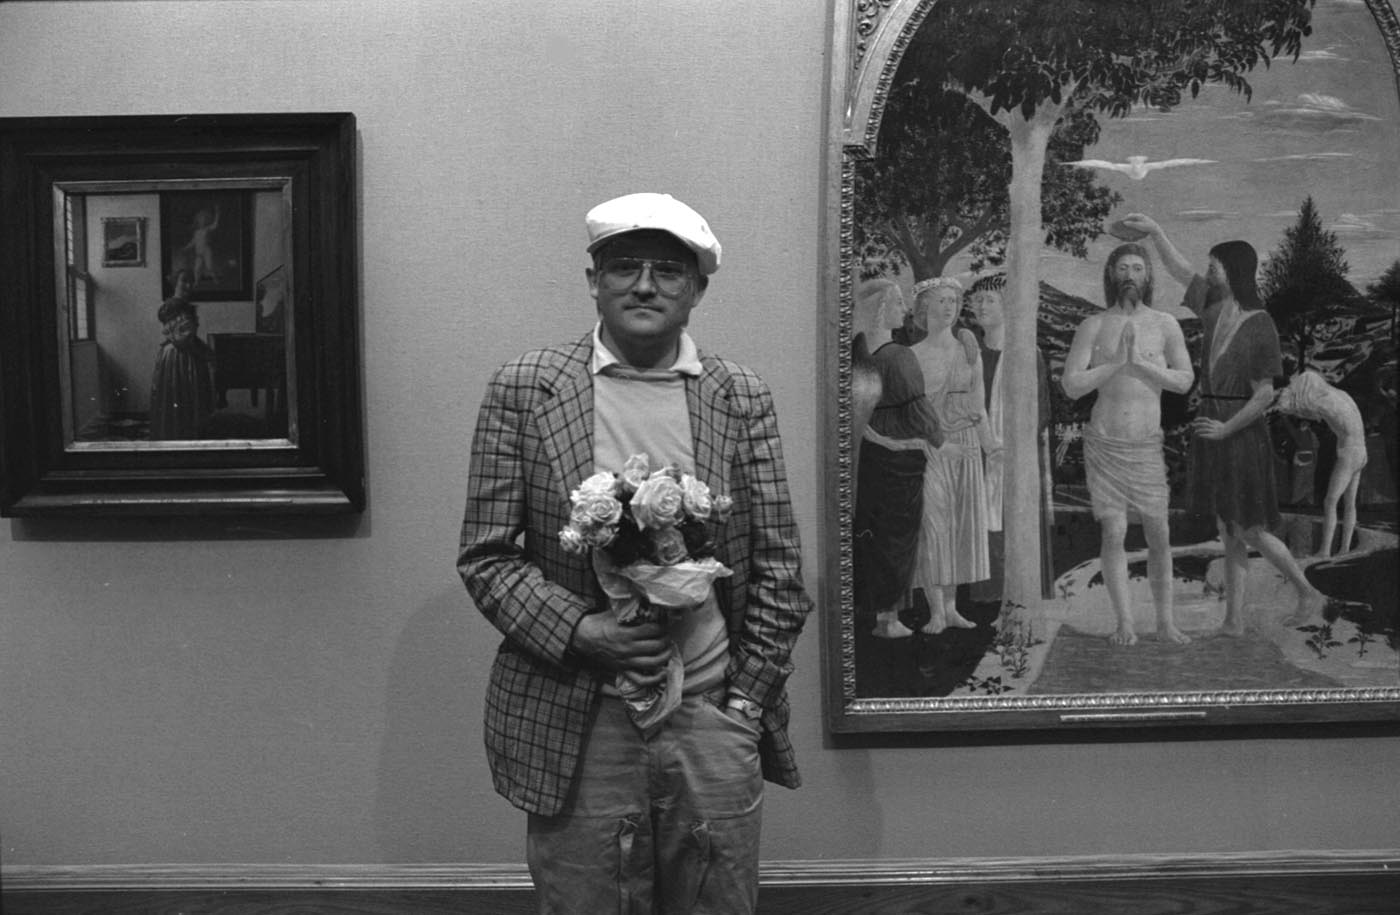 David Hockney incontra Piero della Francesca in una mostra alla National Gallery di Londra